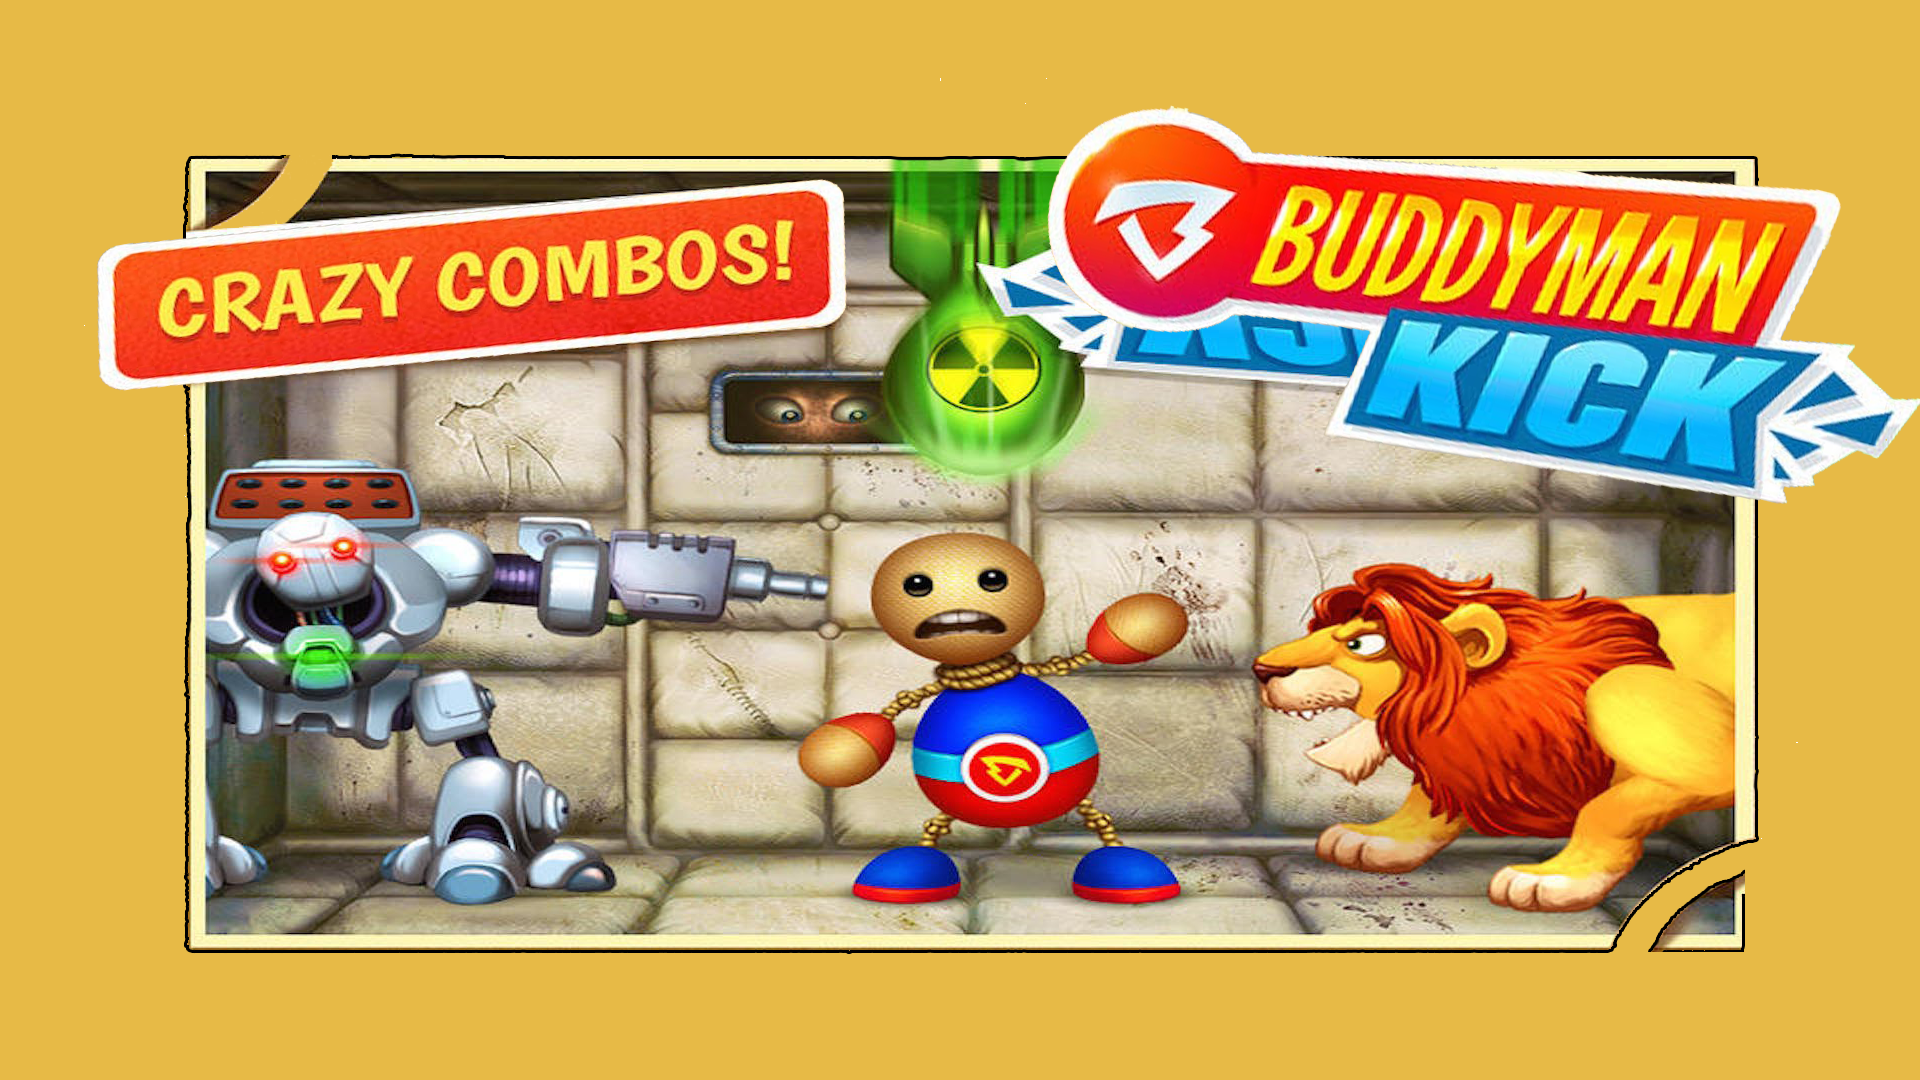 Screenshot 1 of Super Buddyman Kick 2 - ហ្គេមរត់ផ្សងព្រេង 2.2.0